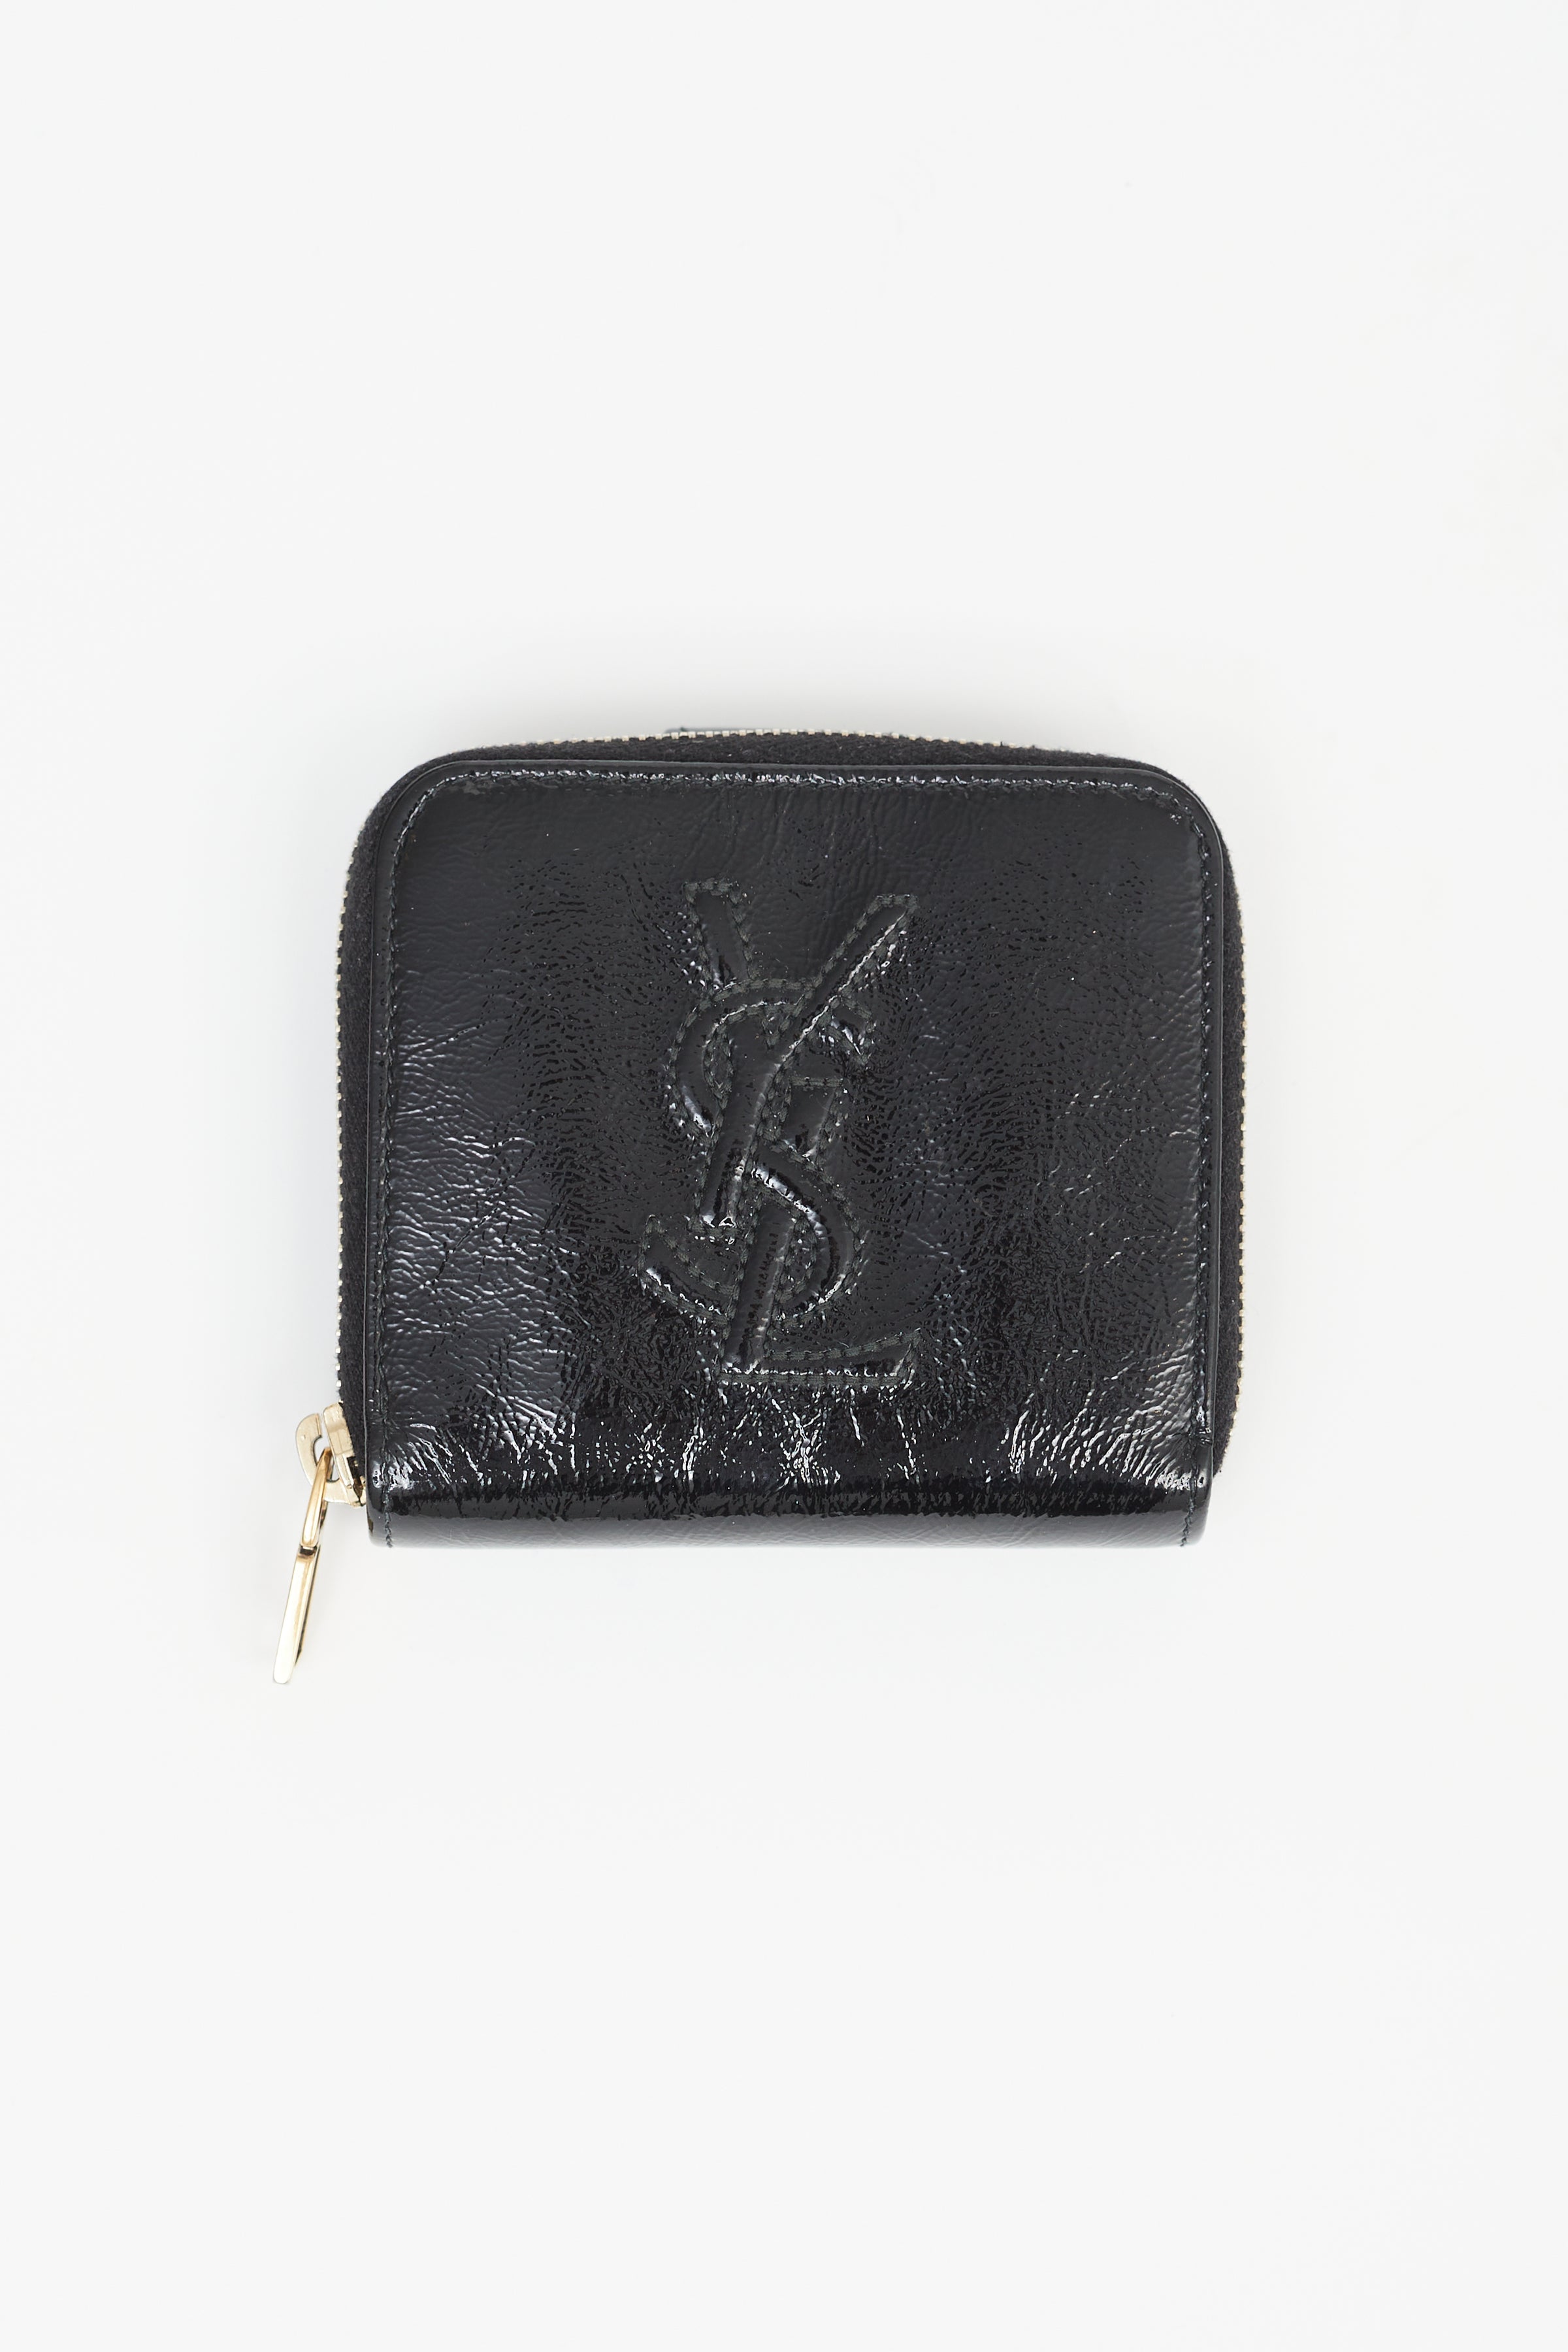 Saint Laurent Men's Tonal Embossed Leather Card Case